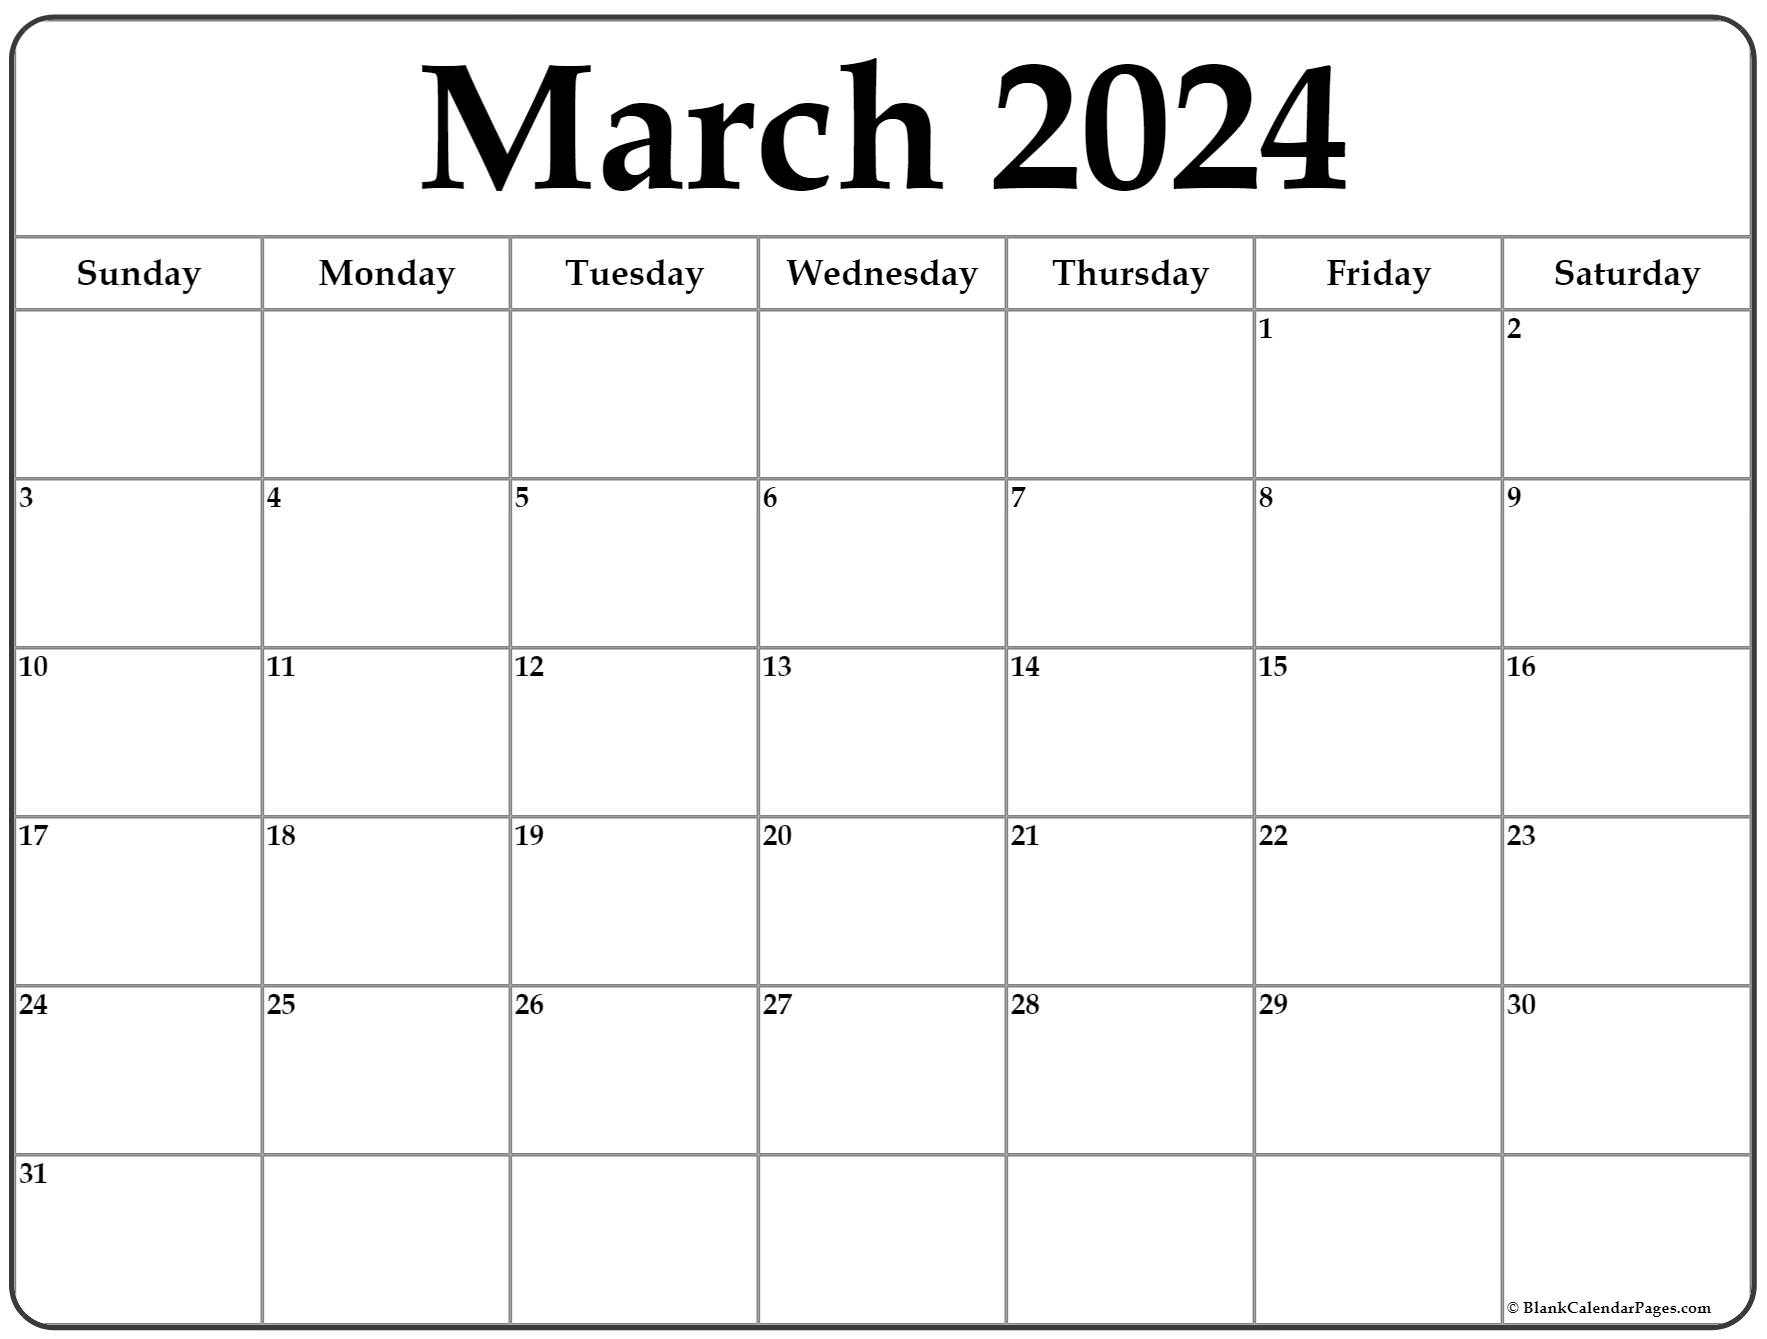 Month Of March 2022 Calendar March 2022 Calendar | Free Printable Calendar Templates